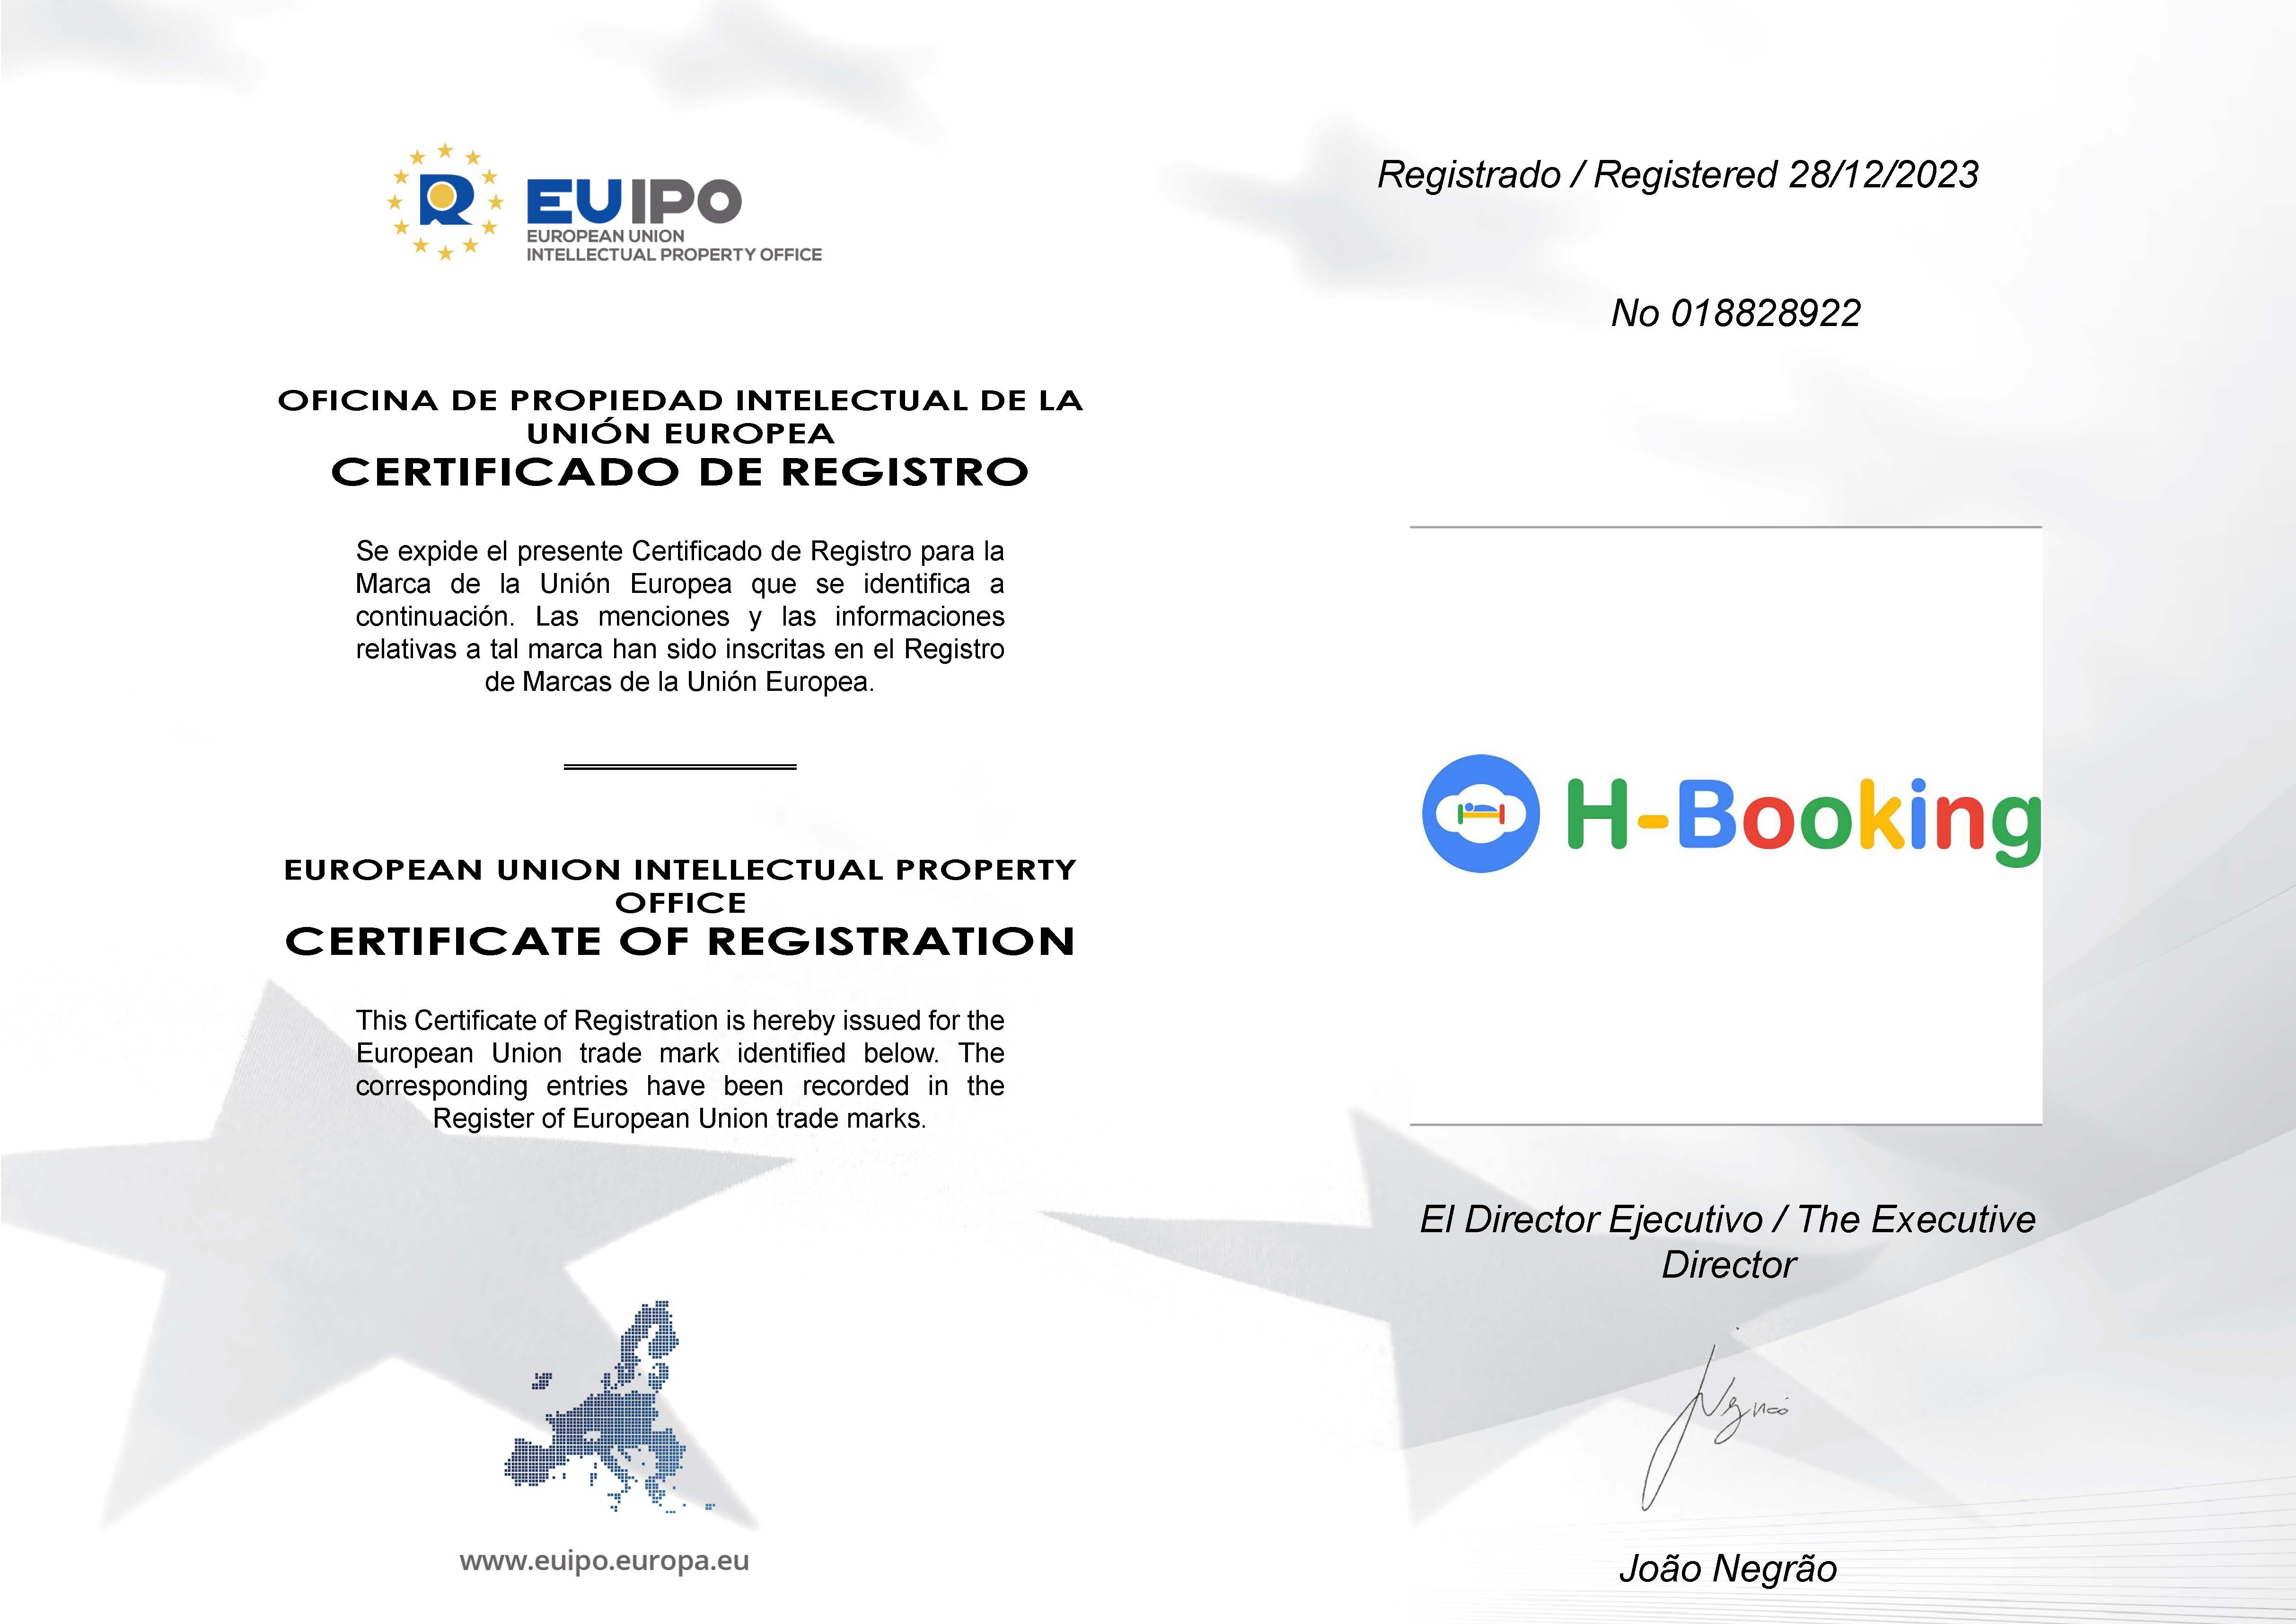 H-Booking Registered in EU_Side_1jpg